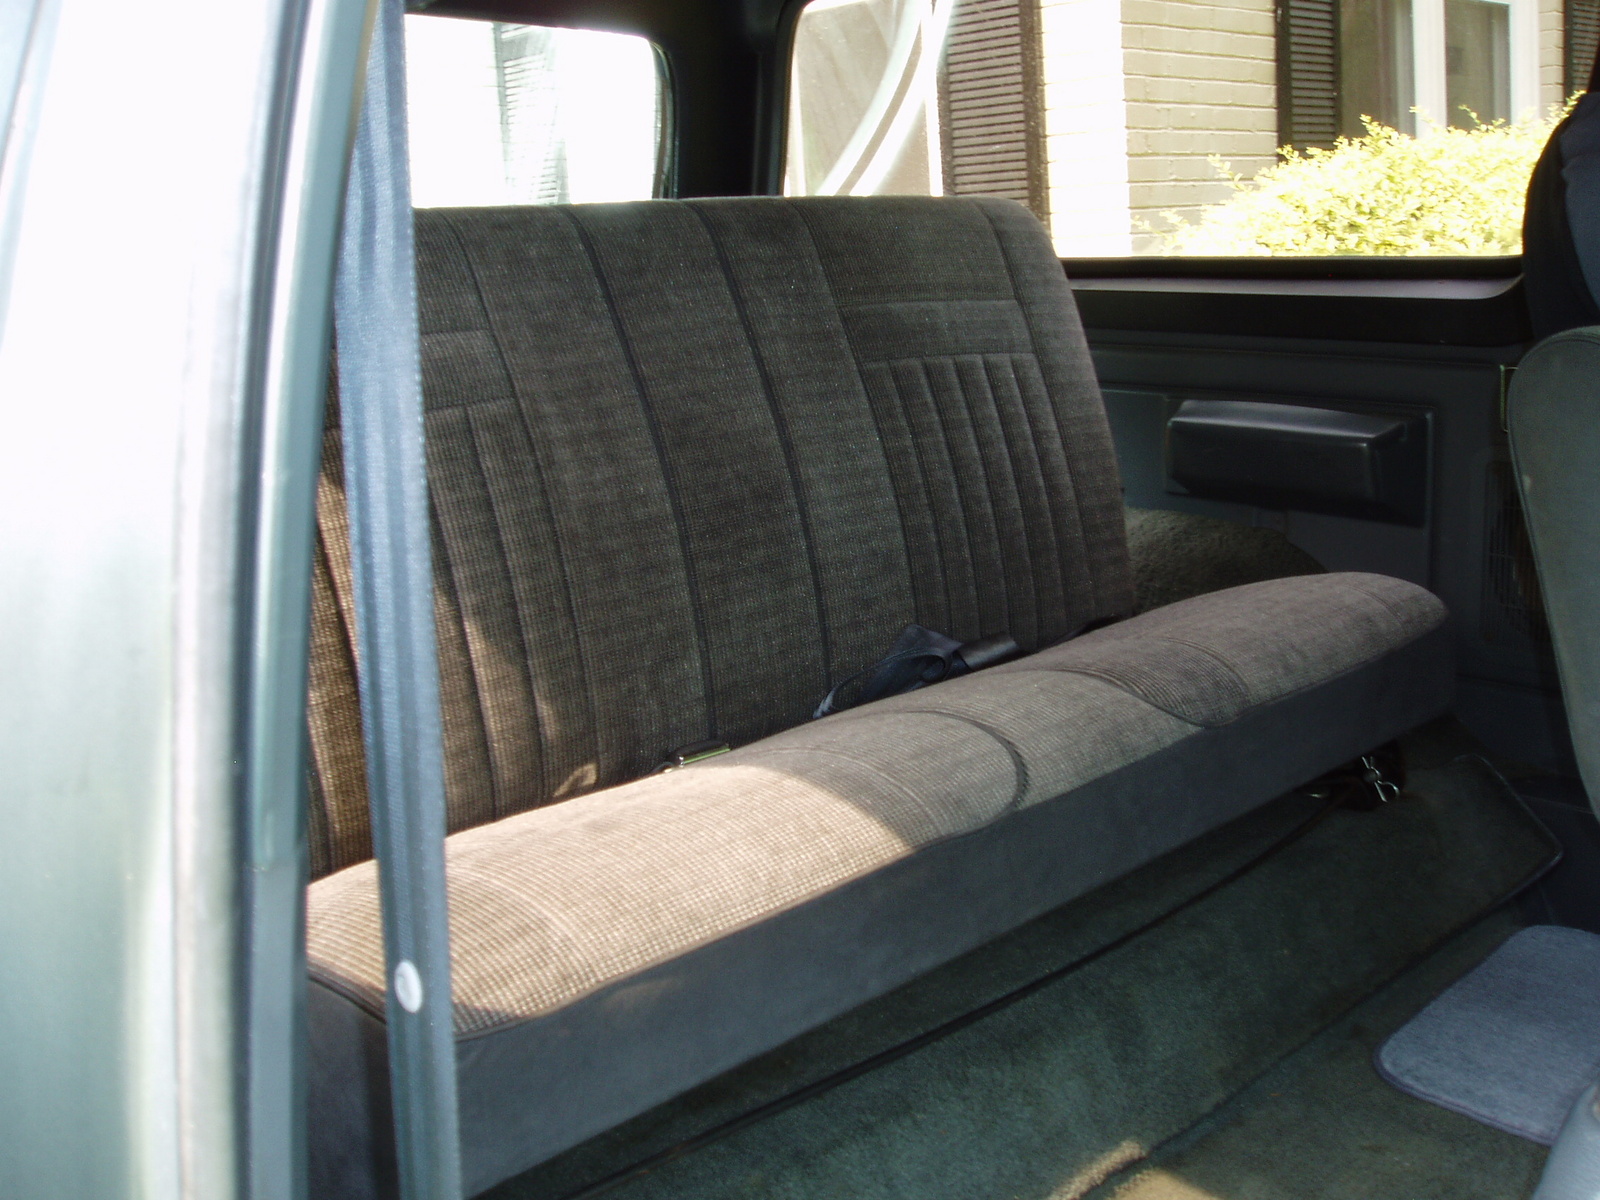 1990 Ford bronco ii interior #10